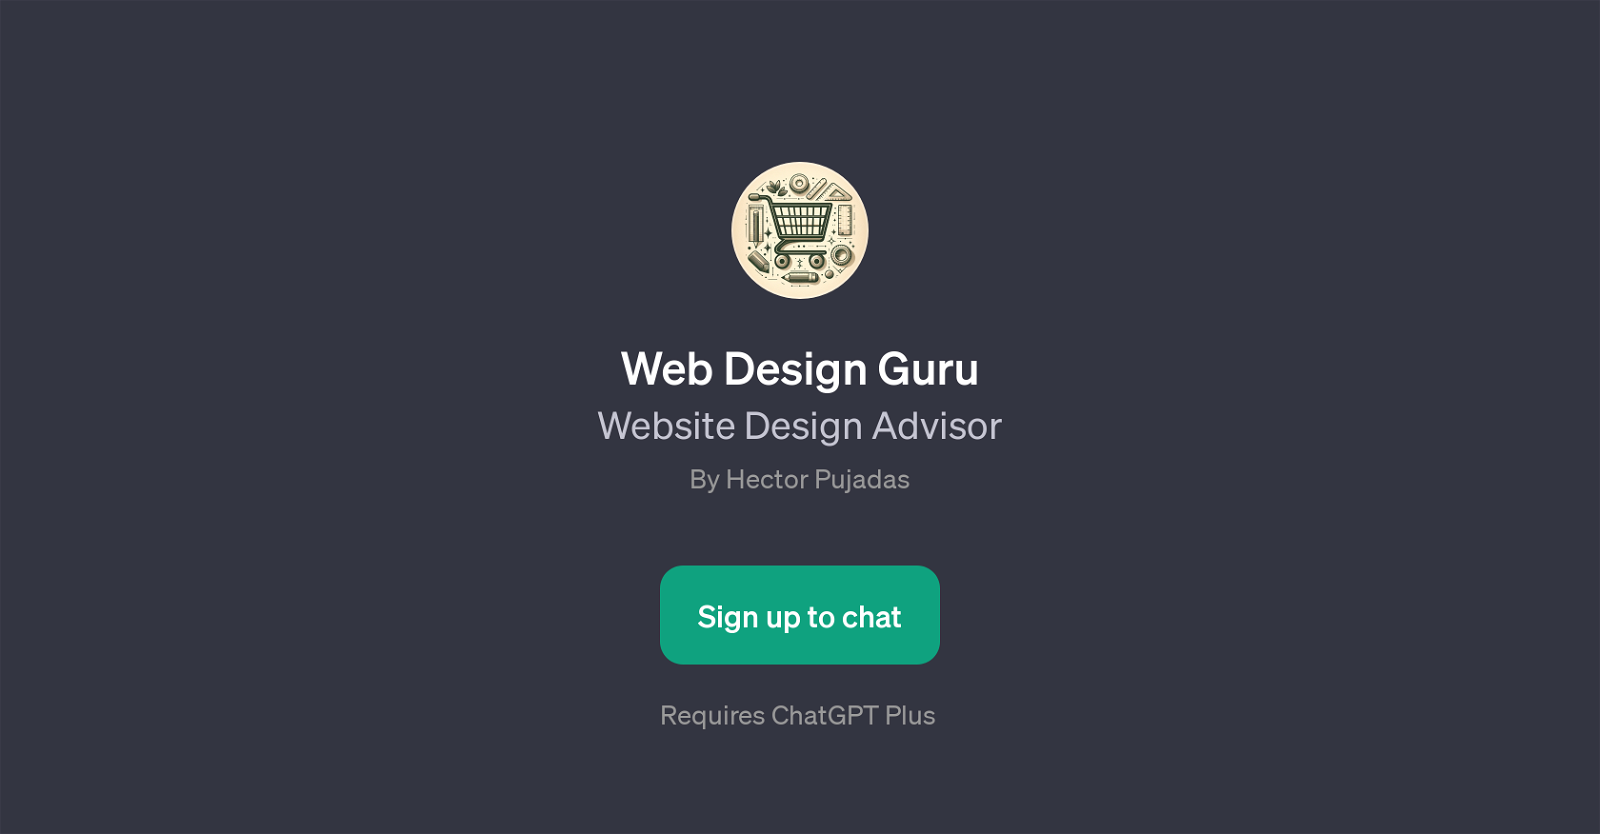 Web Design Guru website